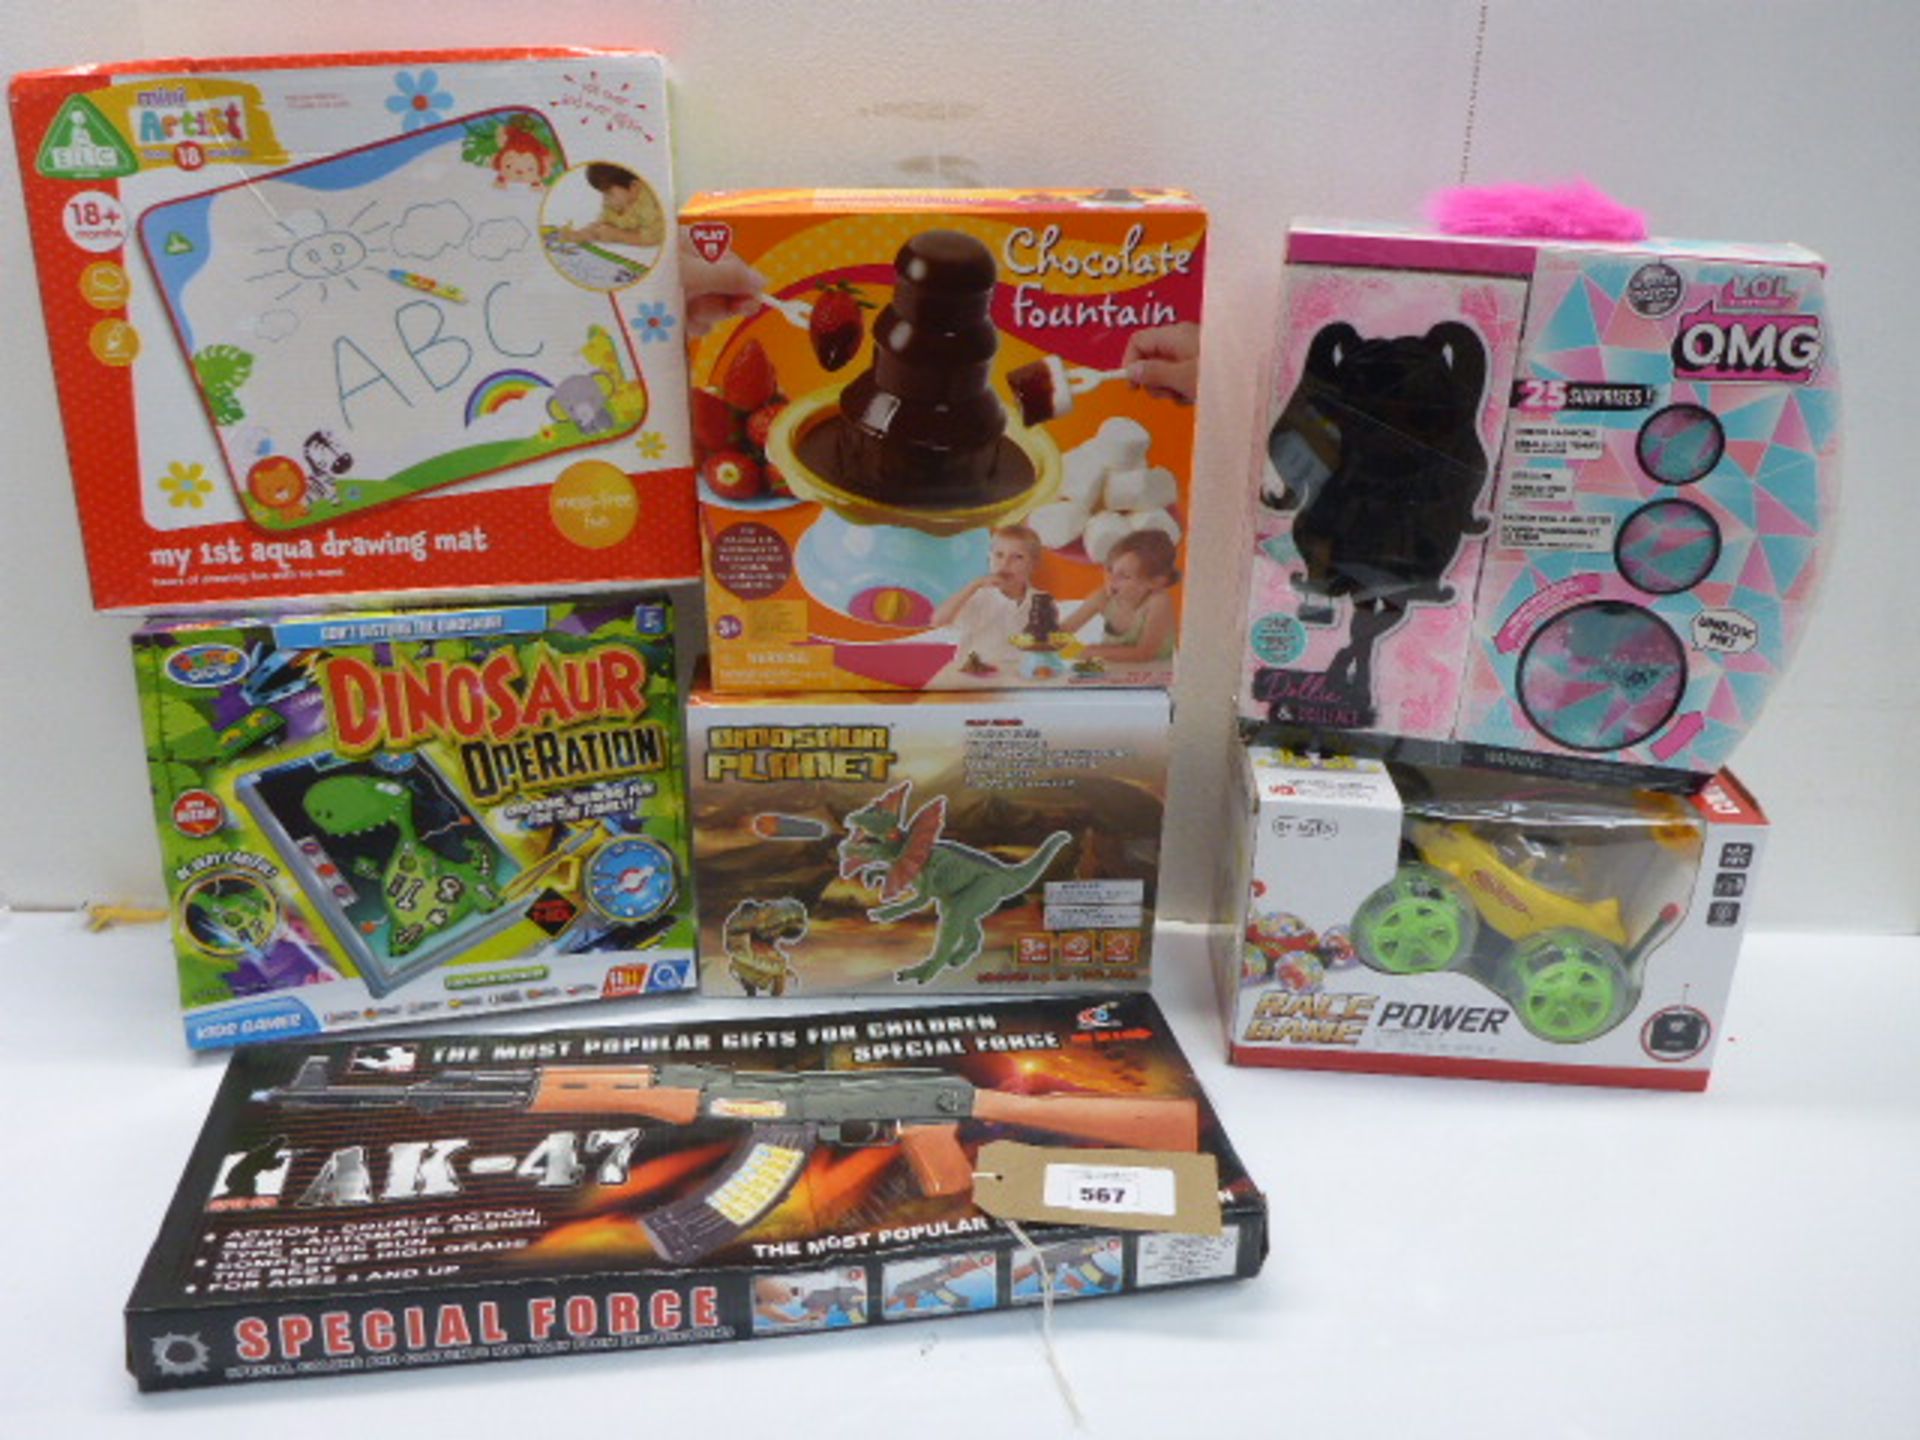 7 boxed games including LOL, r/c power car, Dinosaur Planet, Dinosaur Operation, Chocolate Fountain,